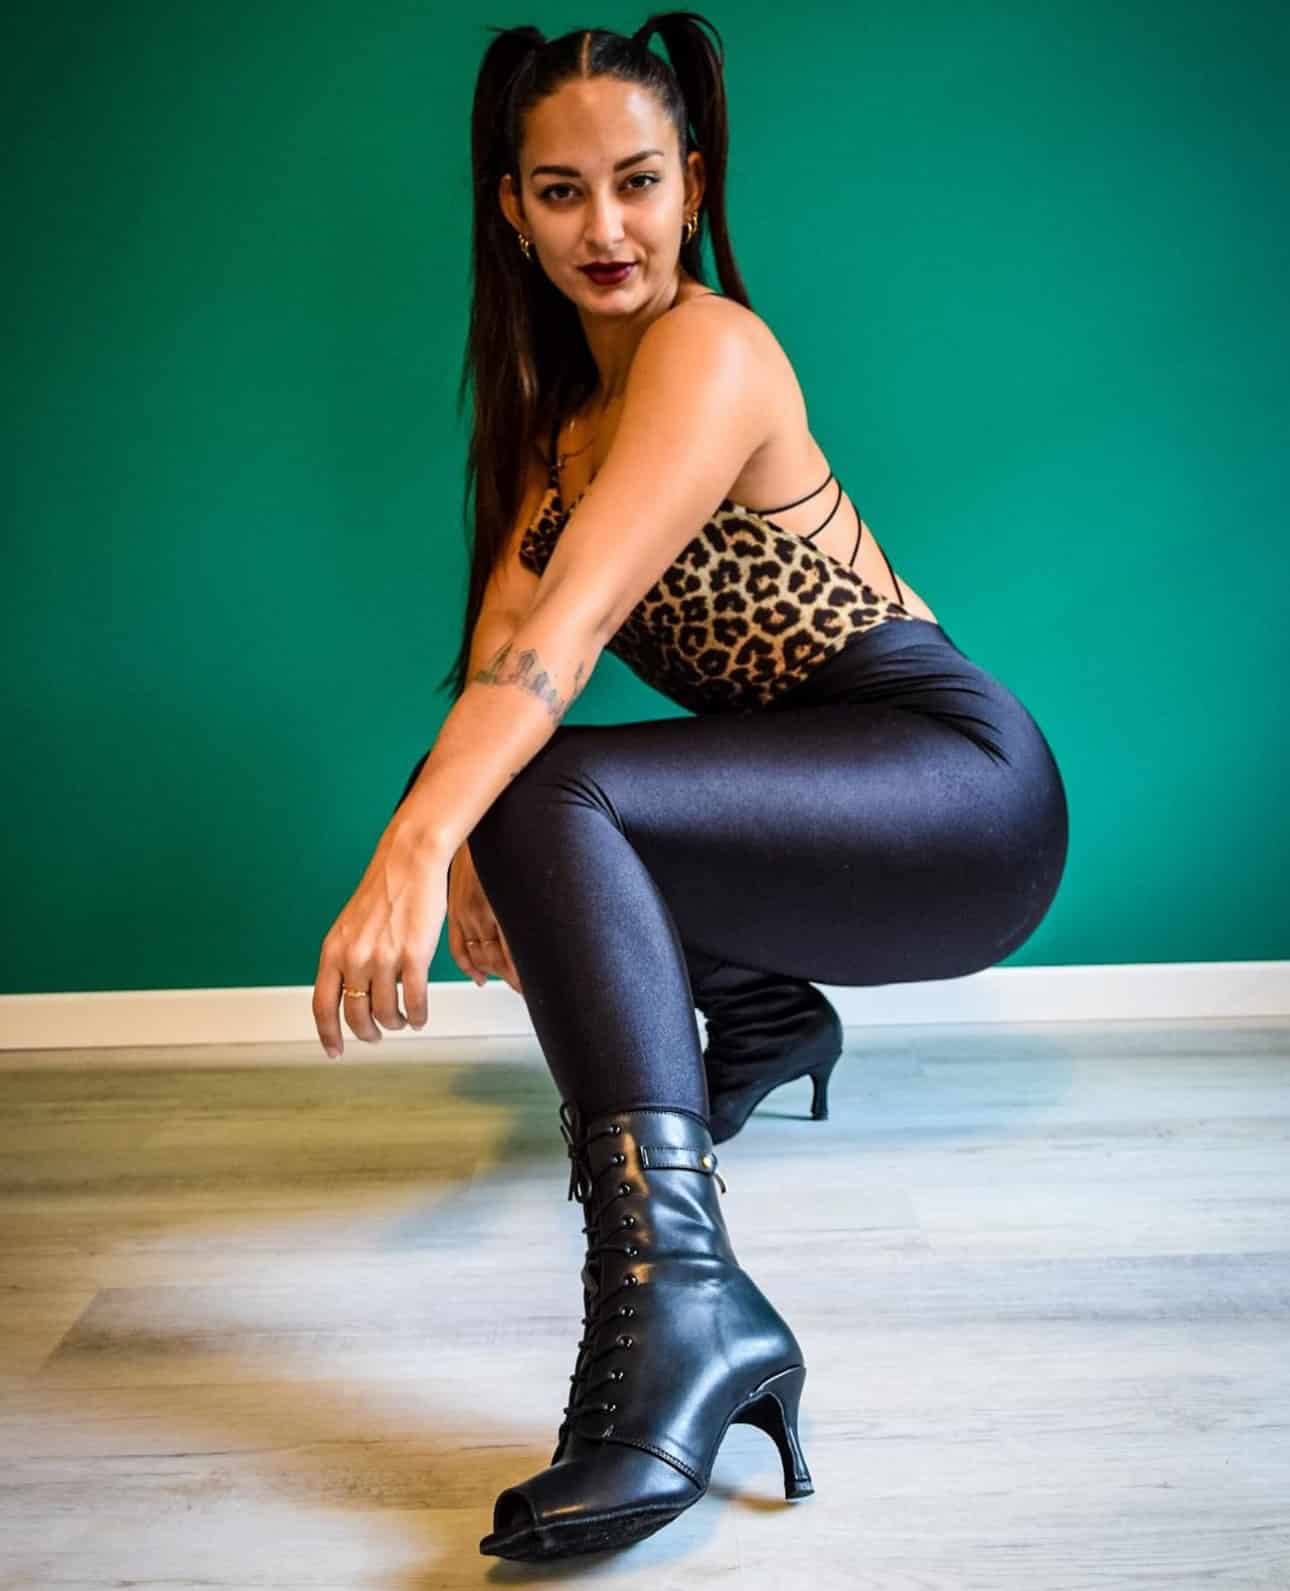 Chiara bachatera wearing Black mid heel stilettos